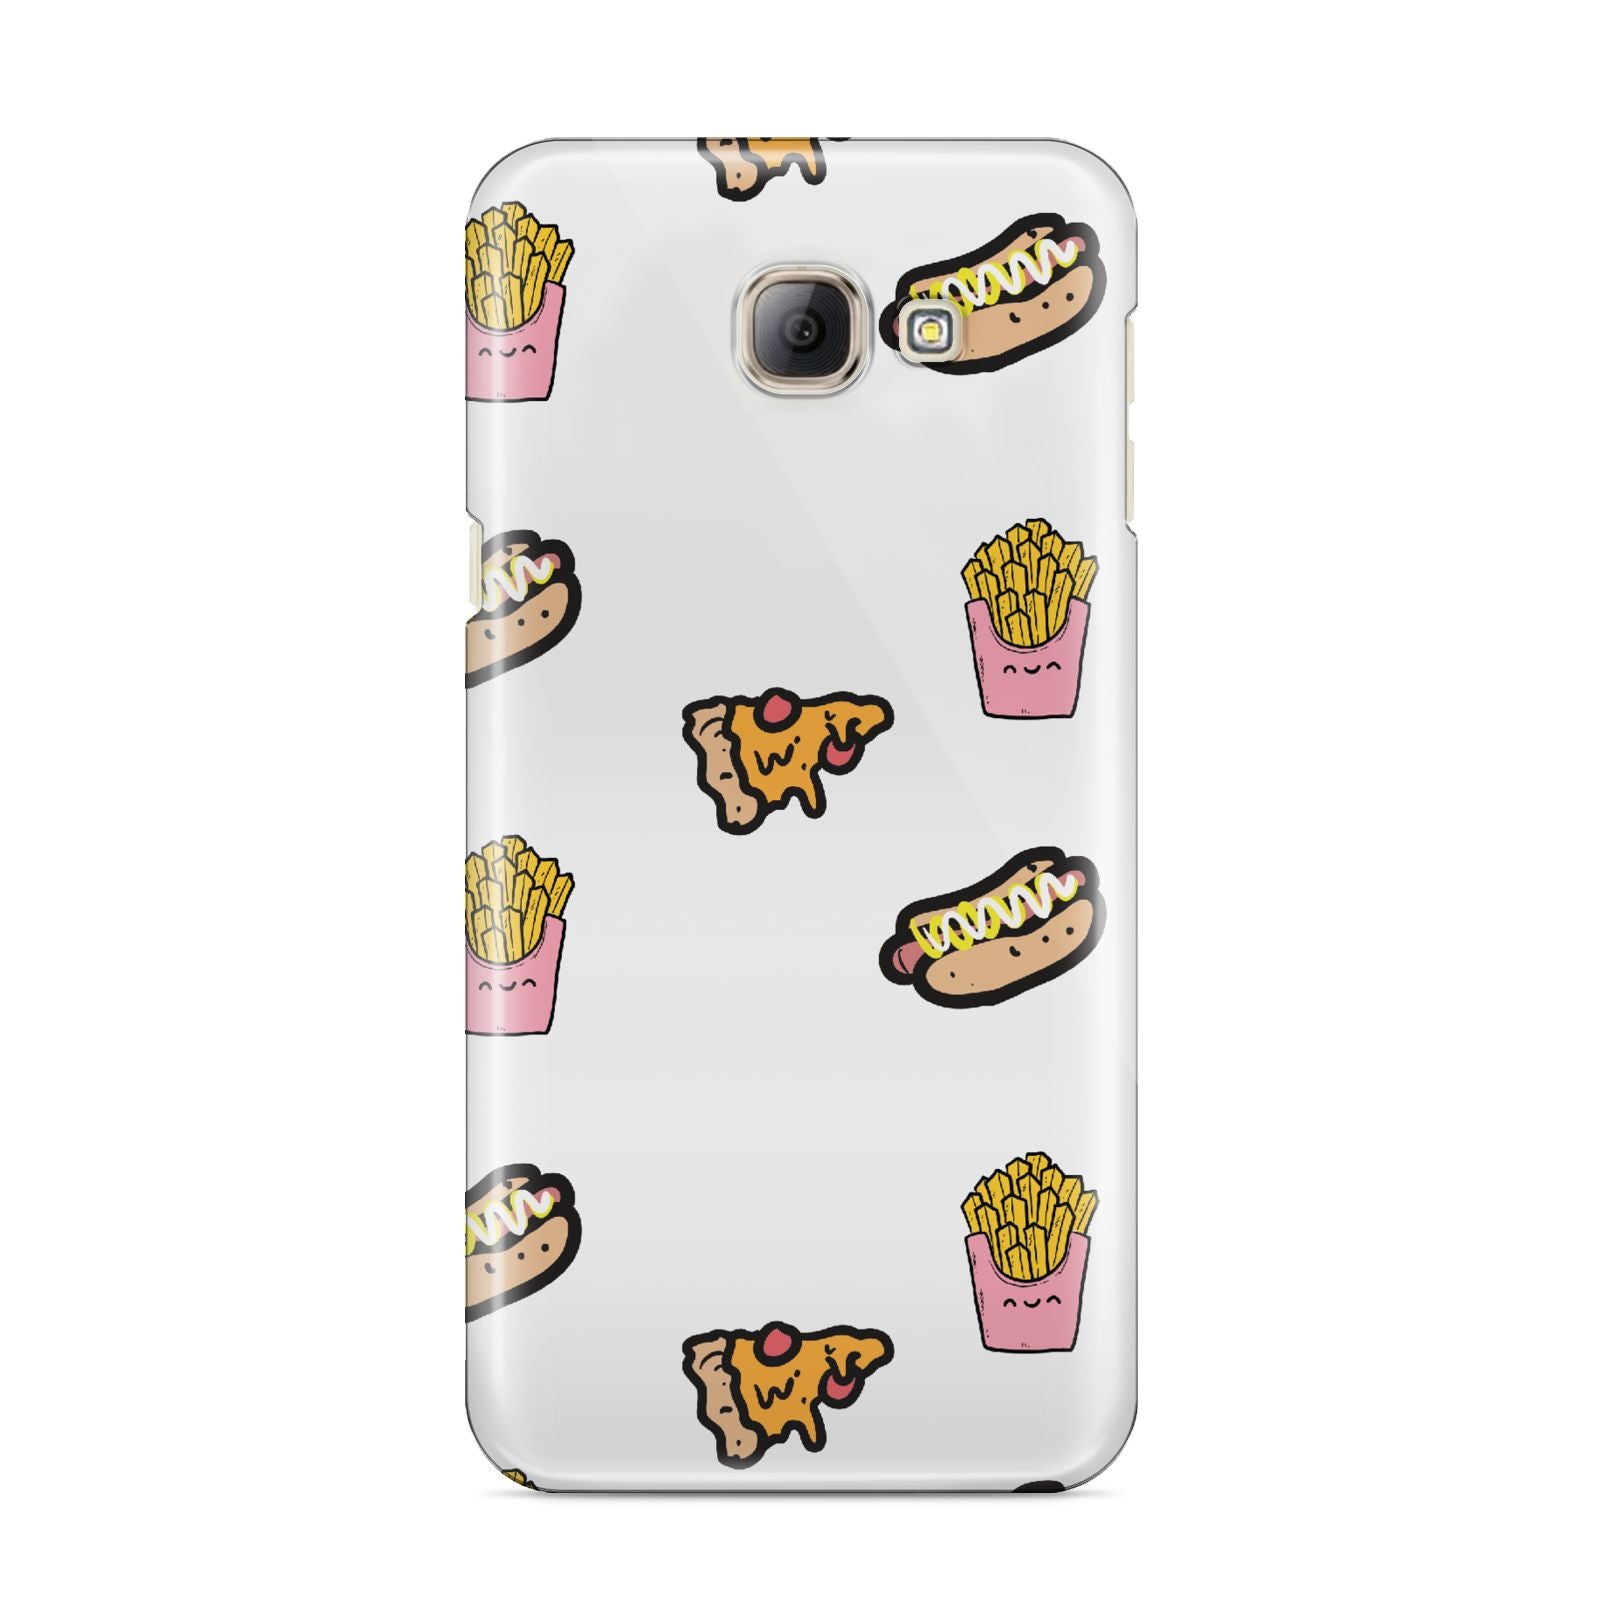 Fries Pizza Hot Dog Samsung Galaxy A8 2016 Case